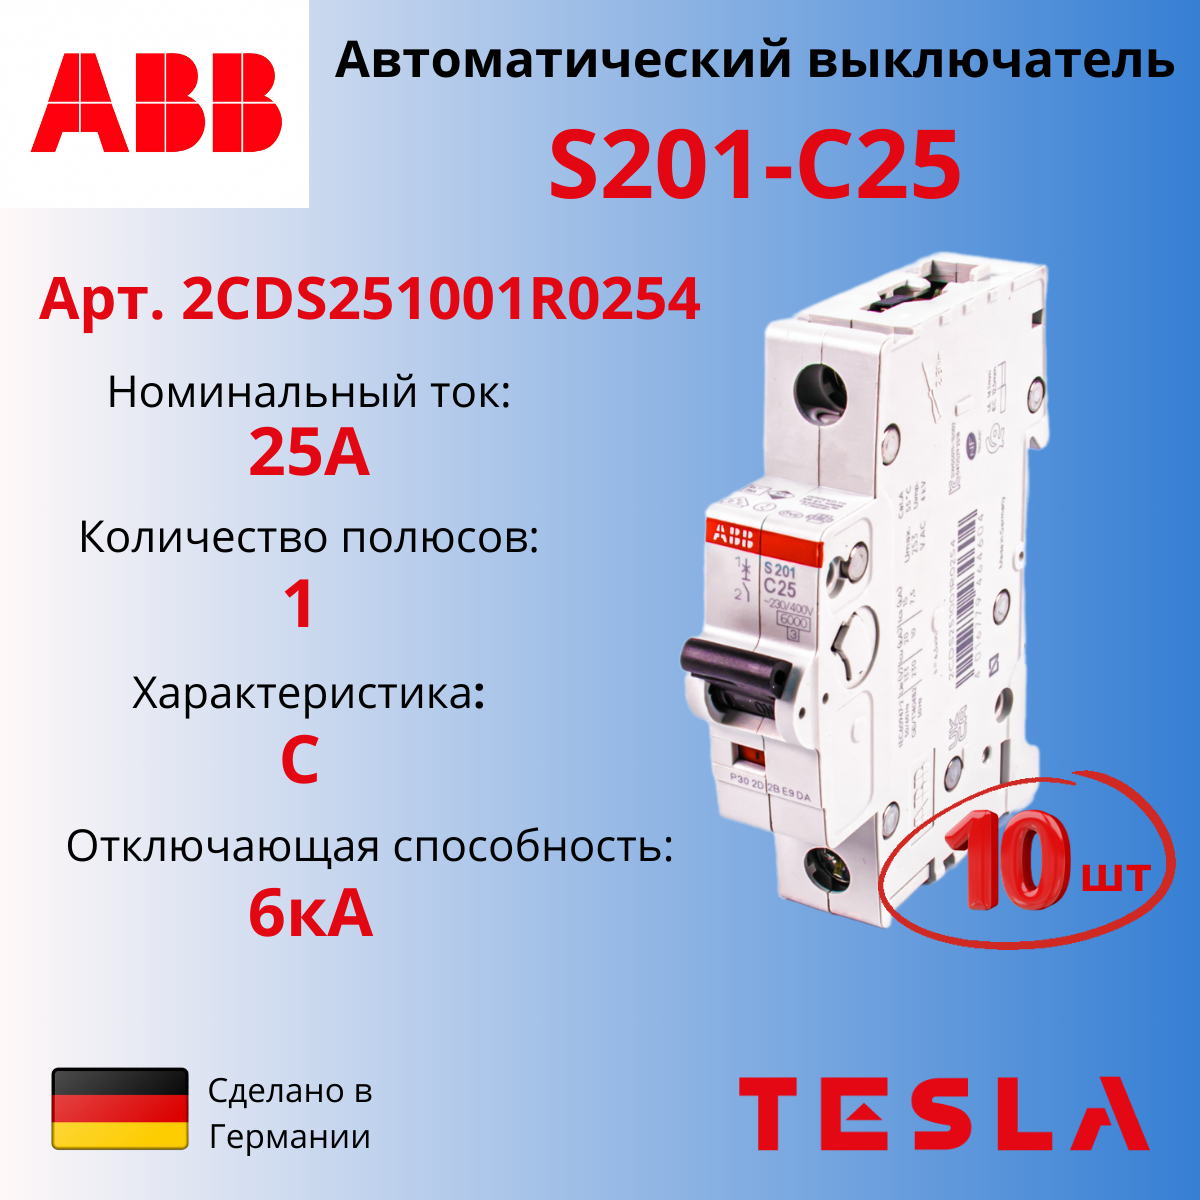 фото Автоматический выключатель abb s201 c25, 1р, 25а 6ка, тип с, 2cds251001r0254, 10 шт